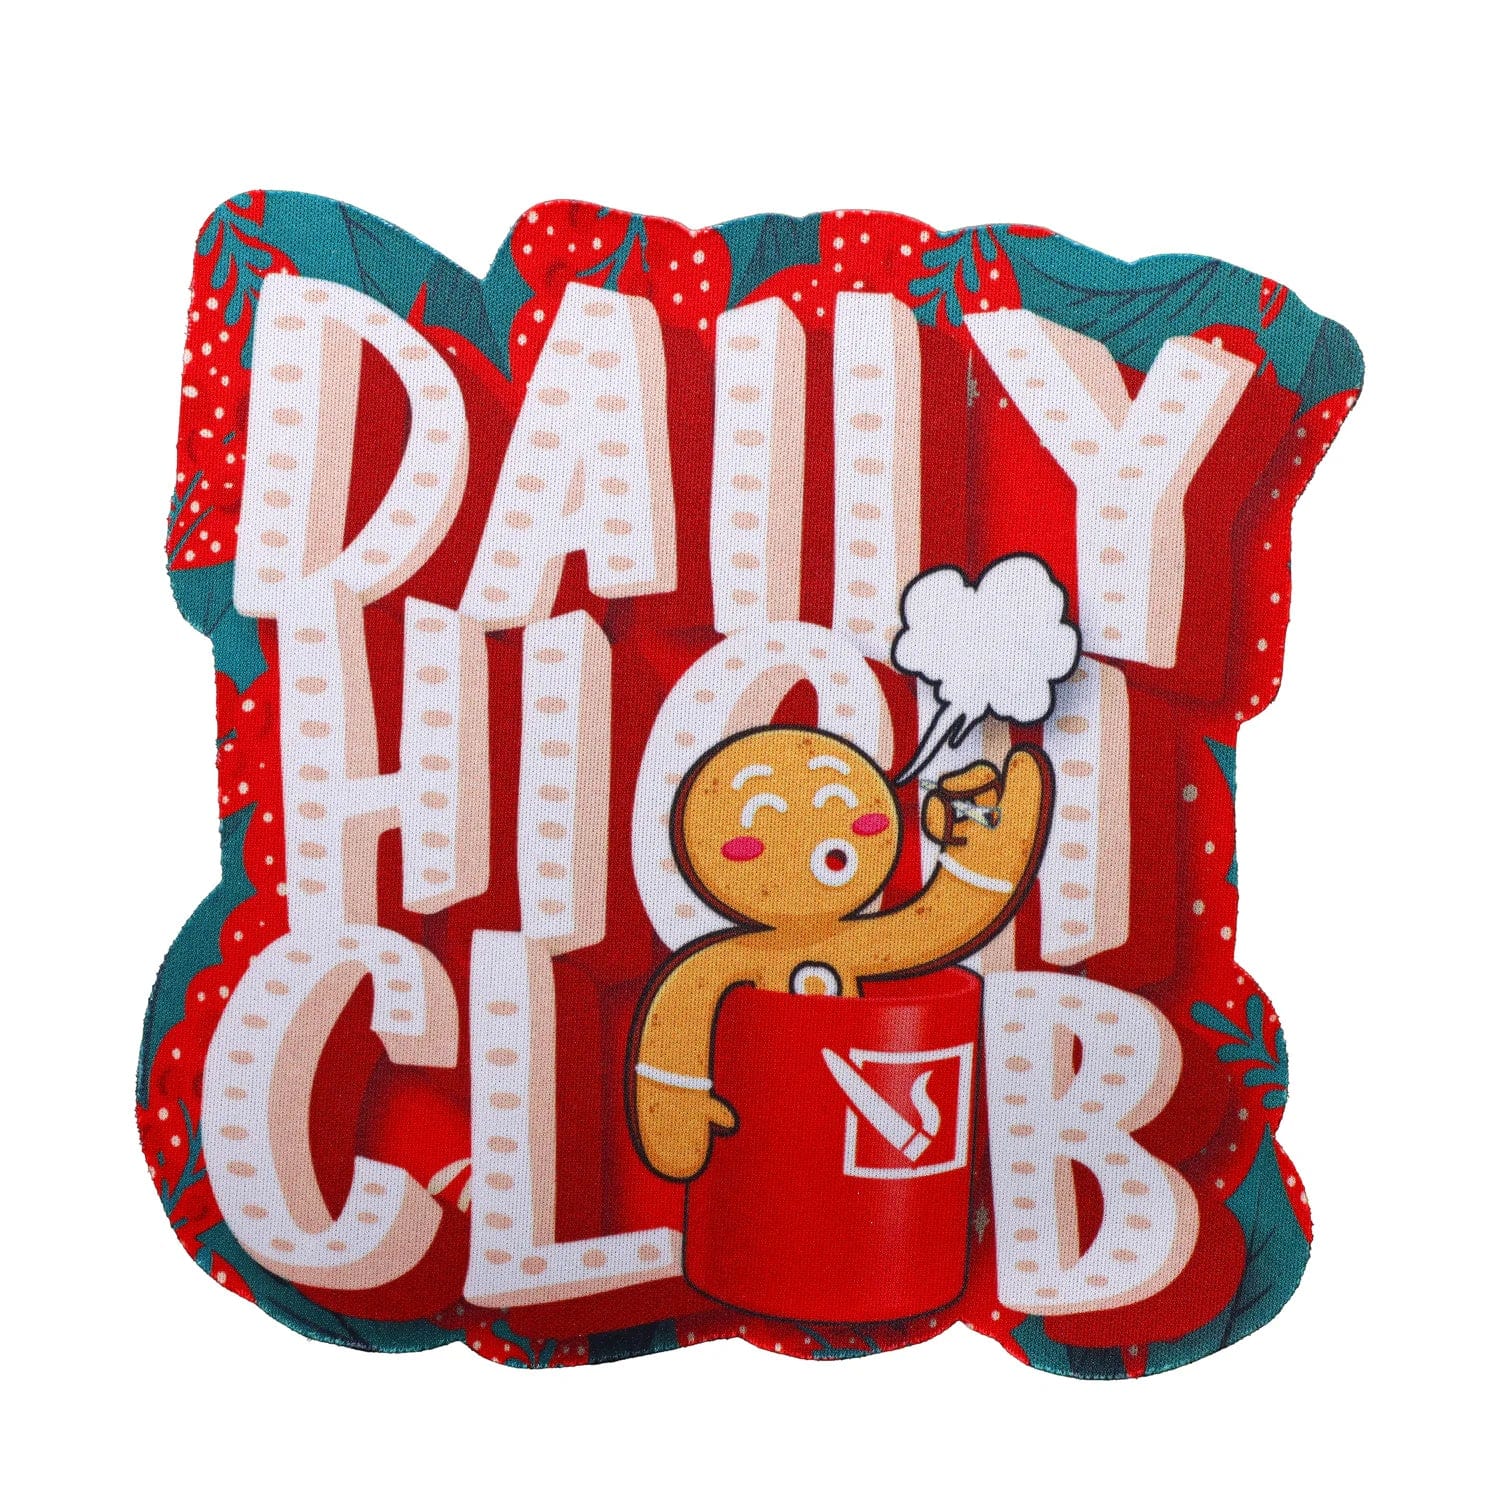 Daily High Club December 2023 